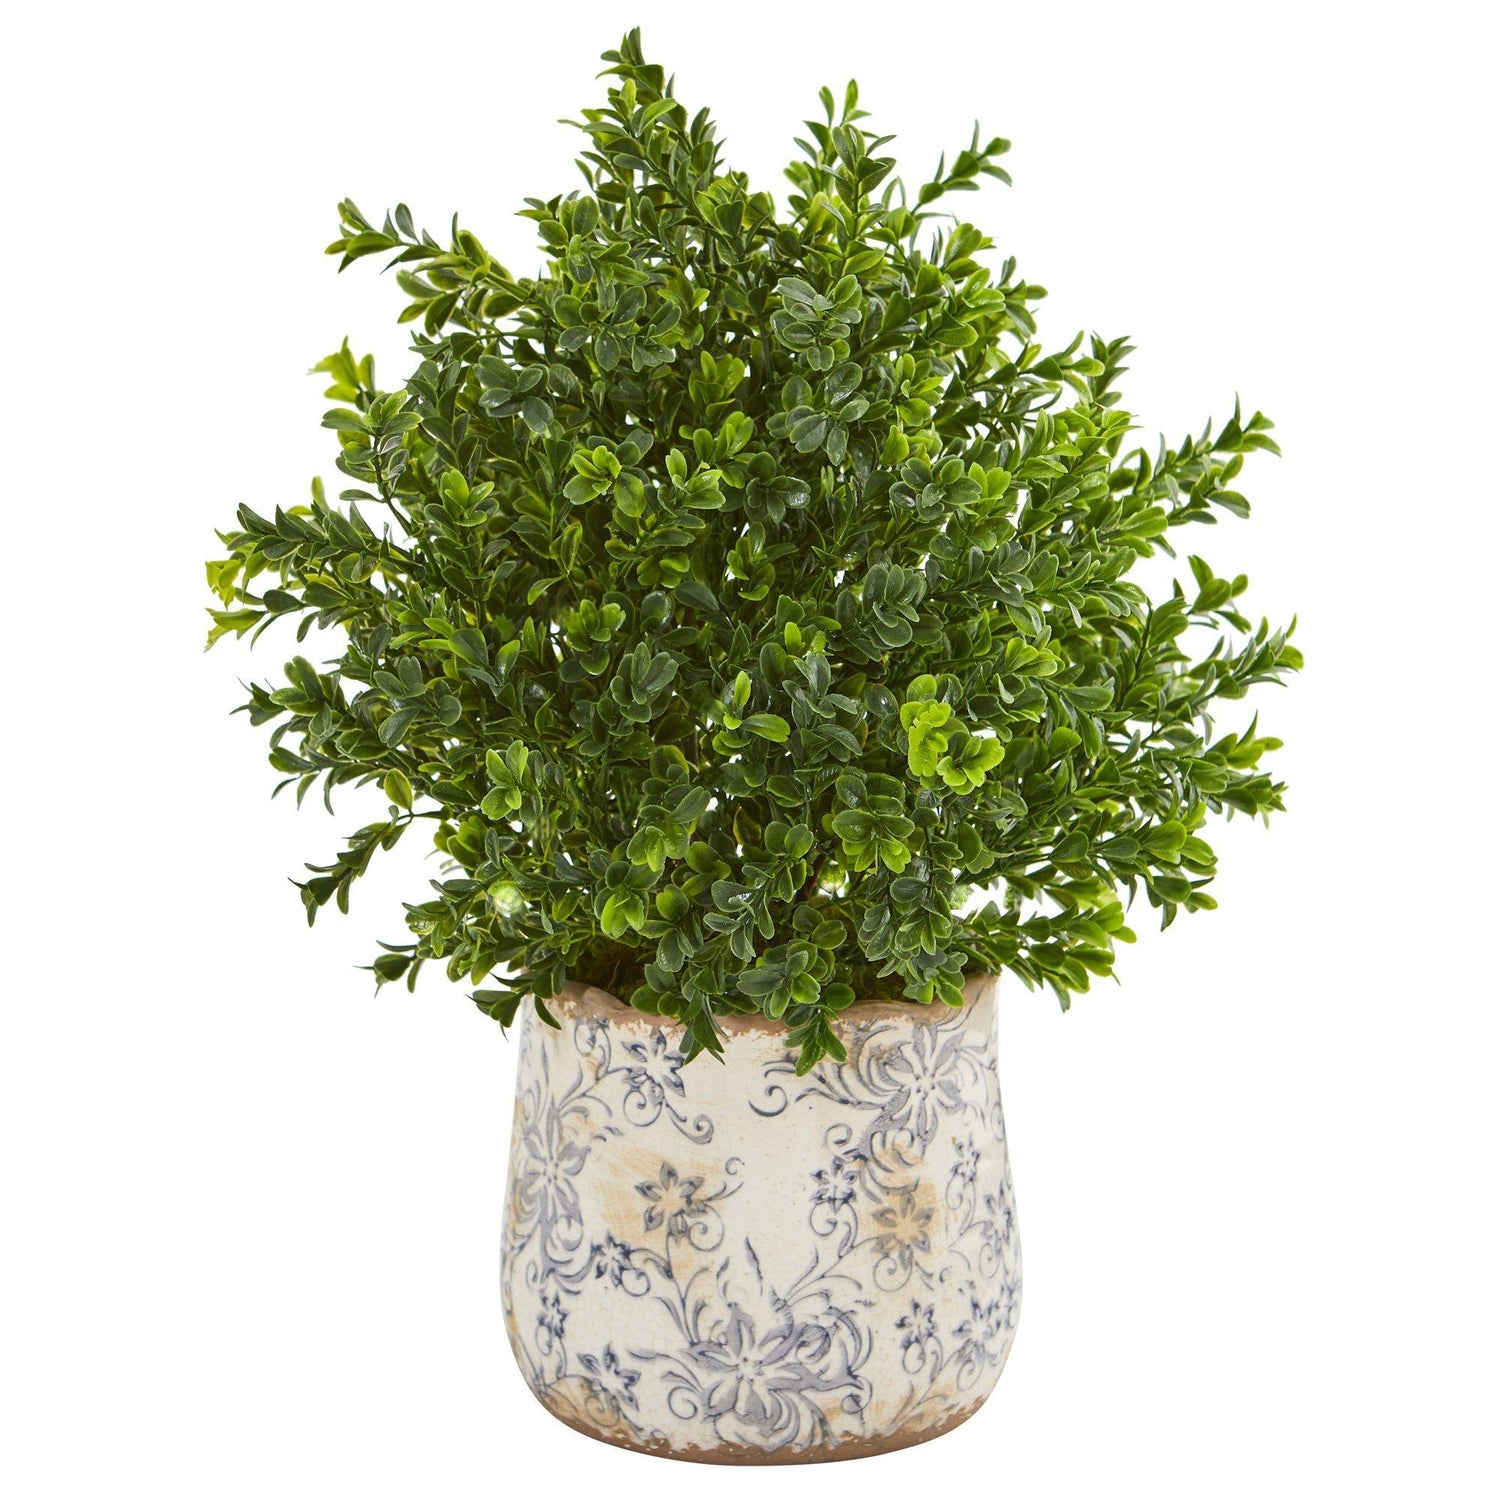 18” Sweet Grass Artificial Plant in Floral Vase (Indoor/Outdoor)